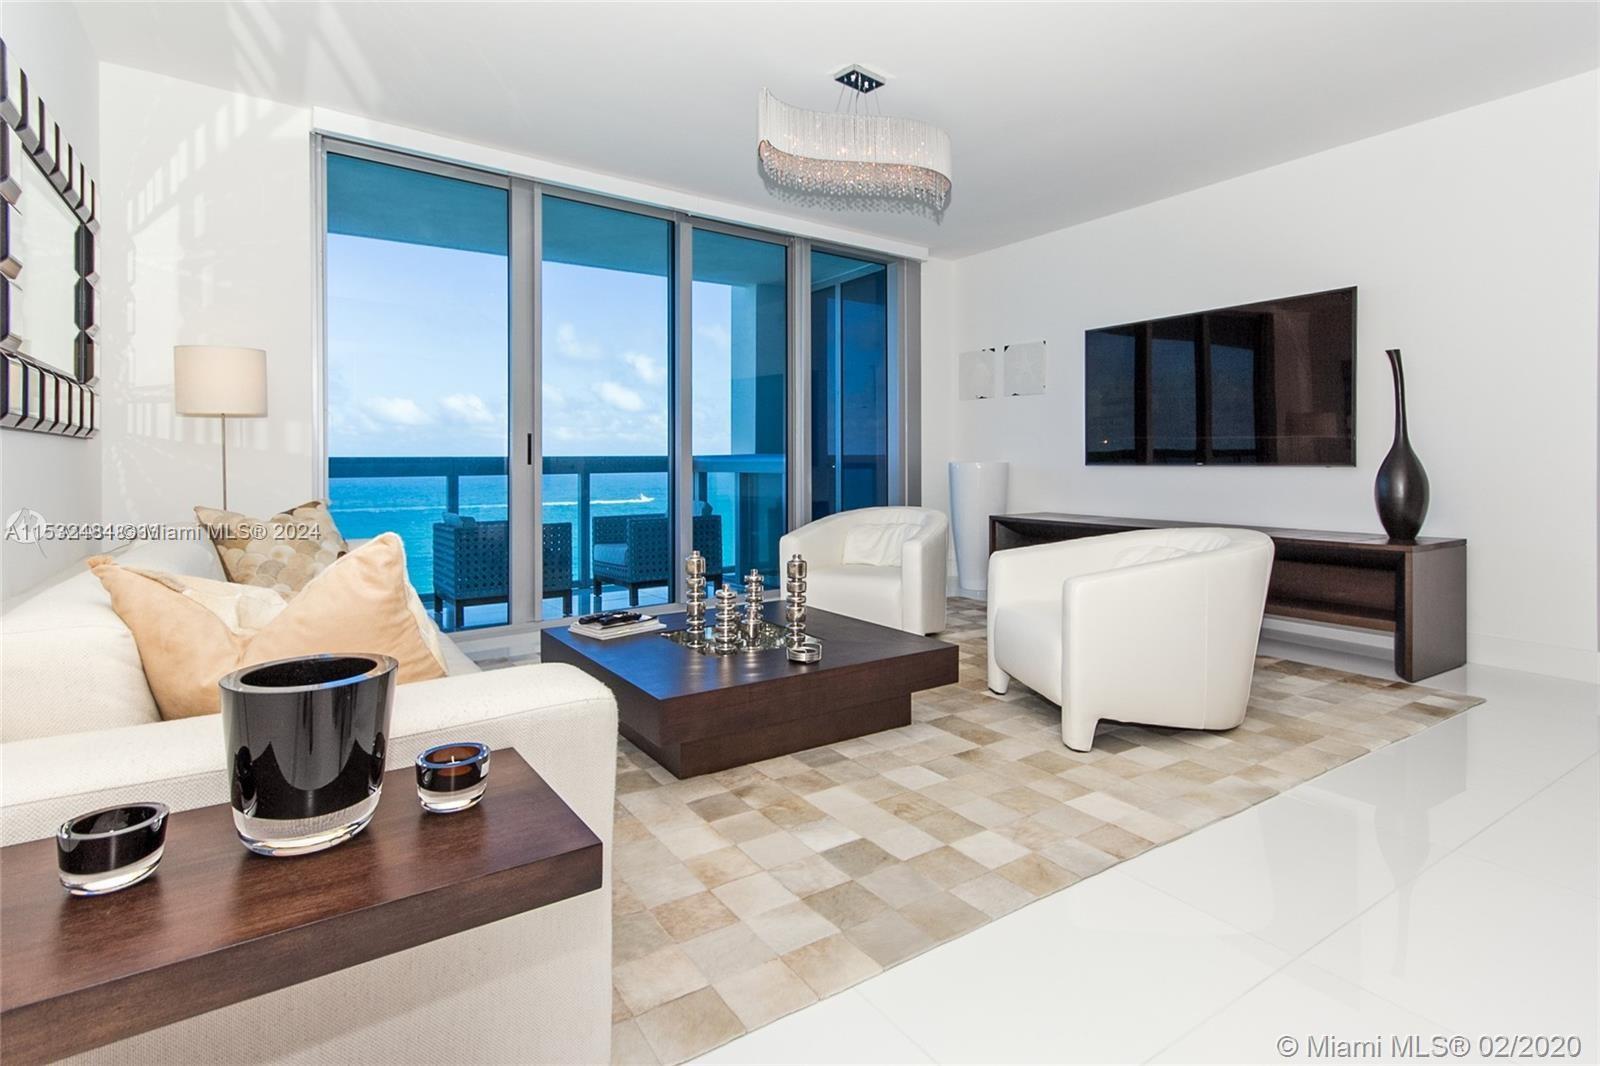 Rental Property at 6899 Collins Ave 2207, Miami Beach, Miami-Dade County, Florida - Bedrooms: 2 
Bathrooms: 3  - $8,900 MO.